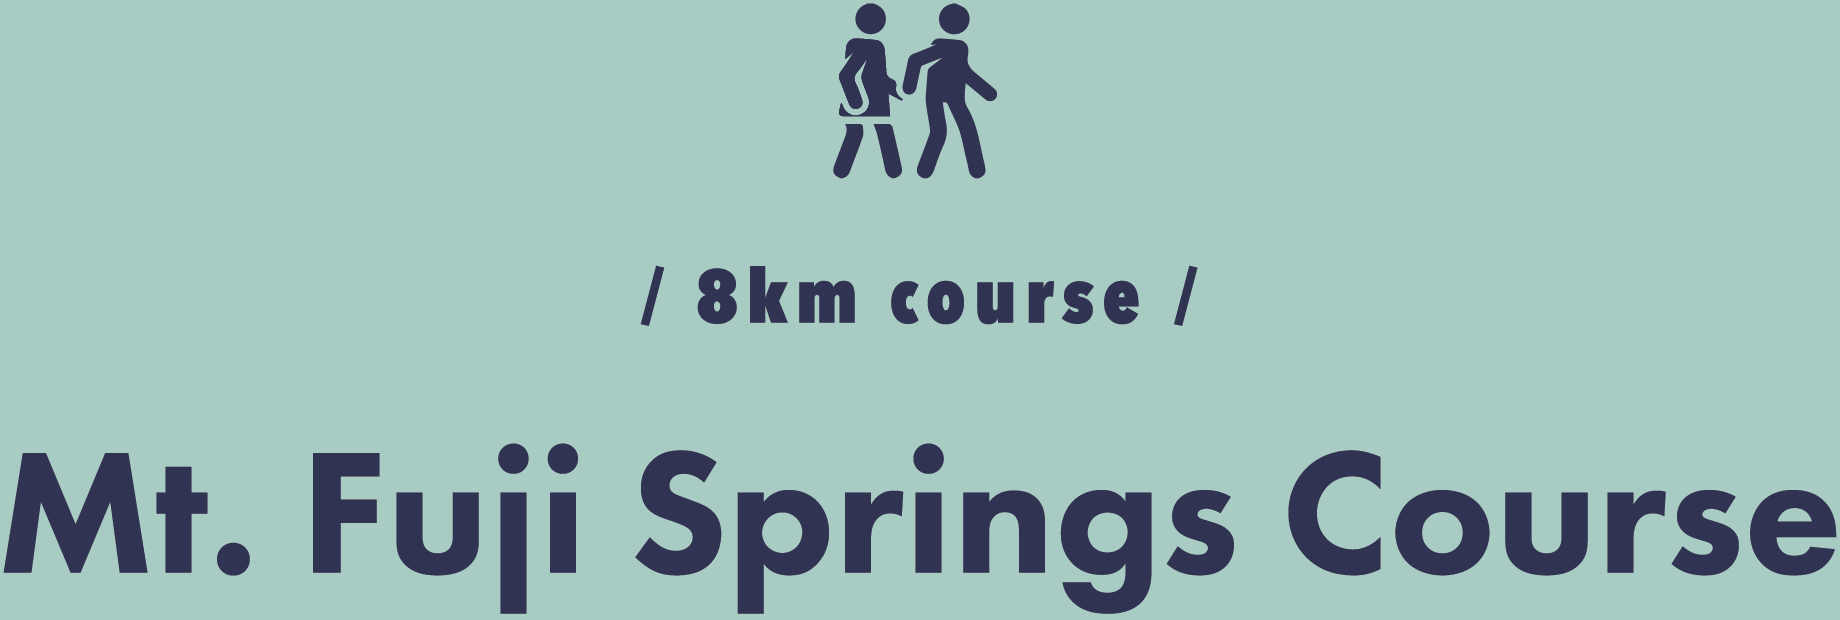 / 8km course / Mt. Fuji Springs Course